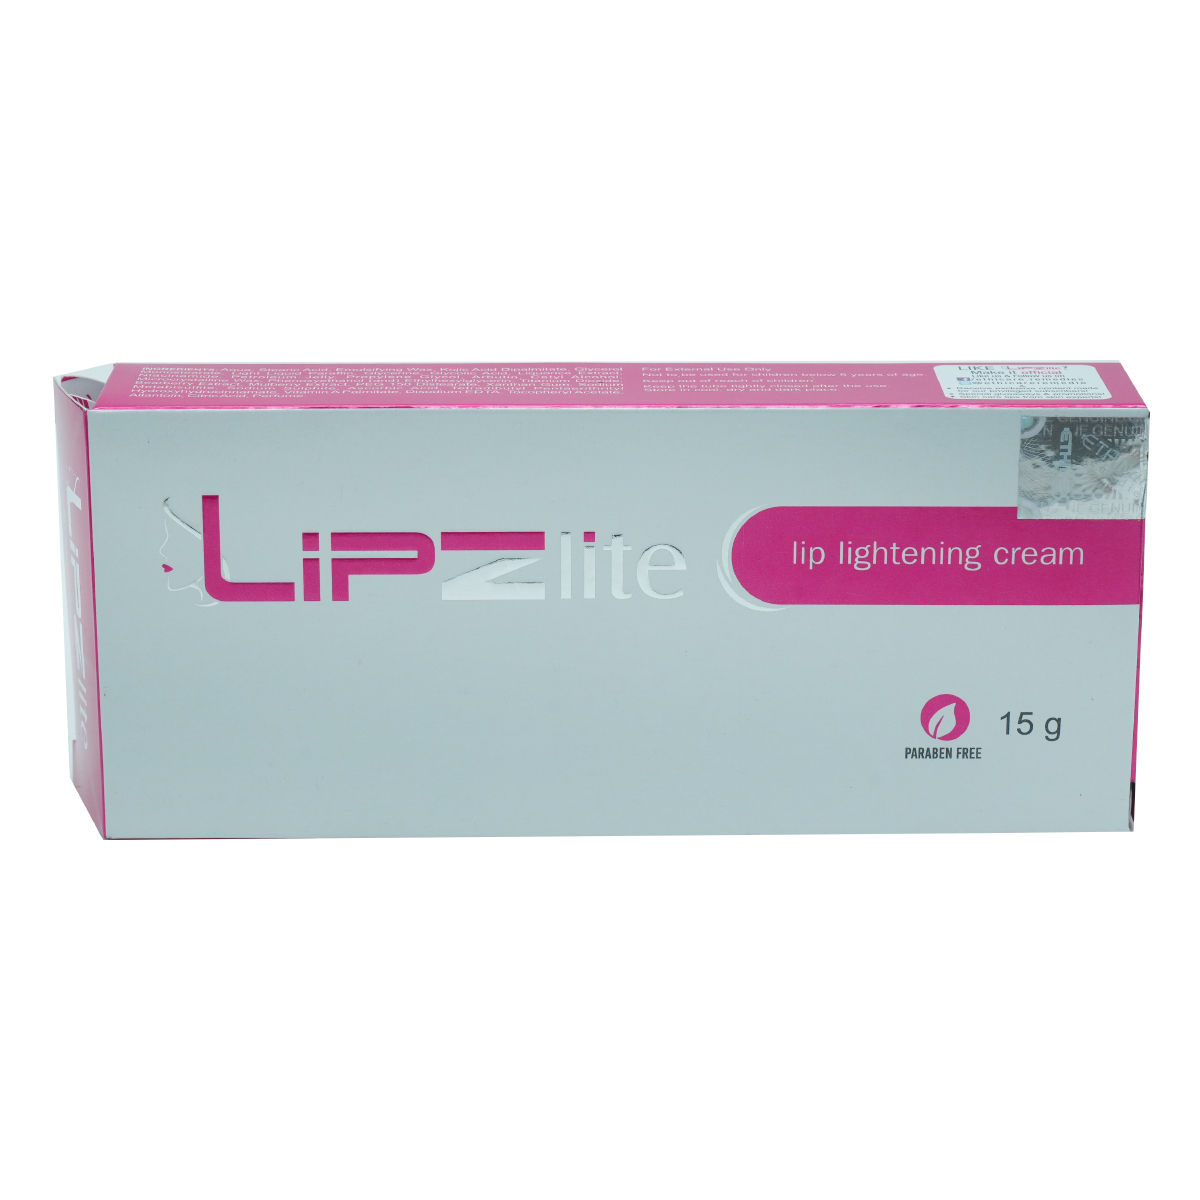 Lipzlite Cream 15 gm, Pack of 1 